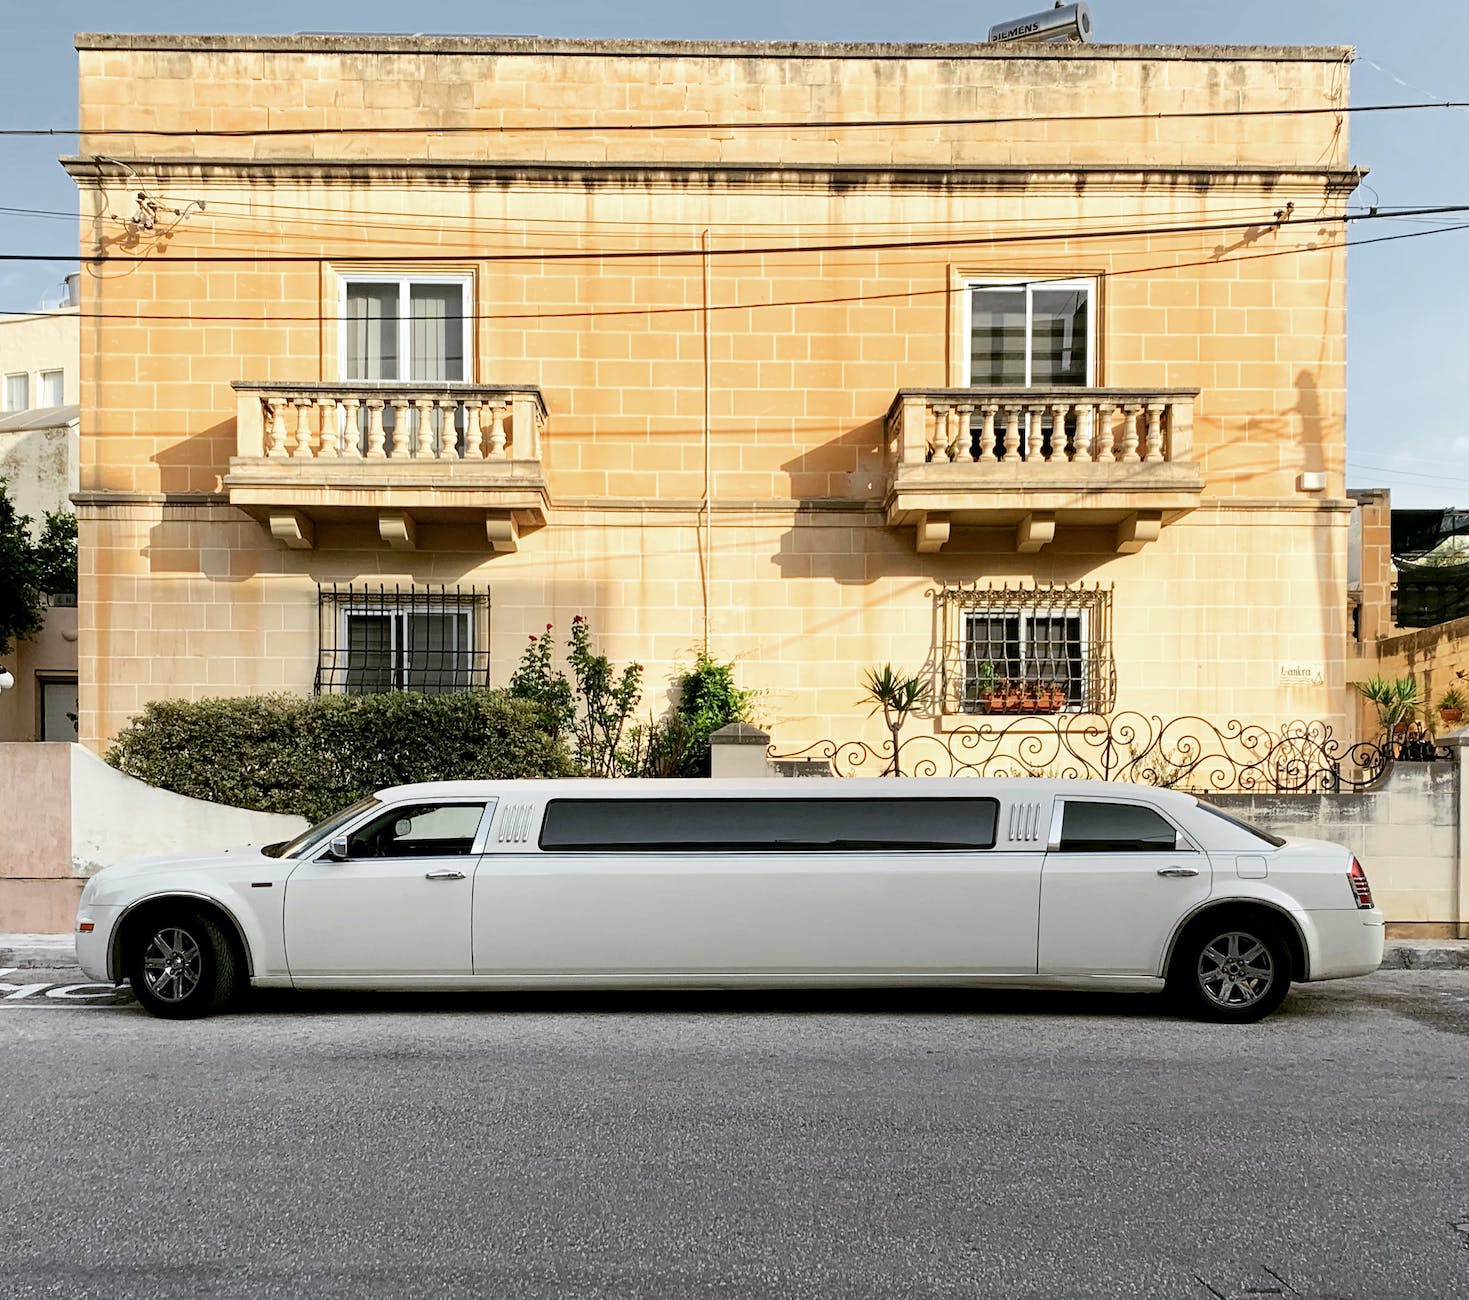 limousine on city street